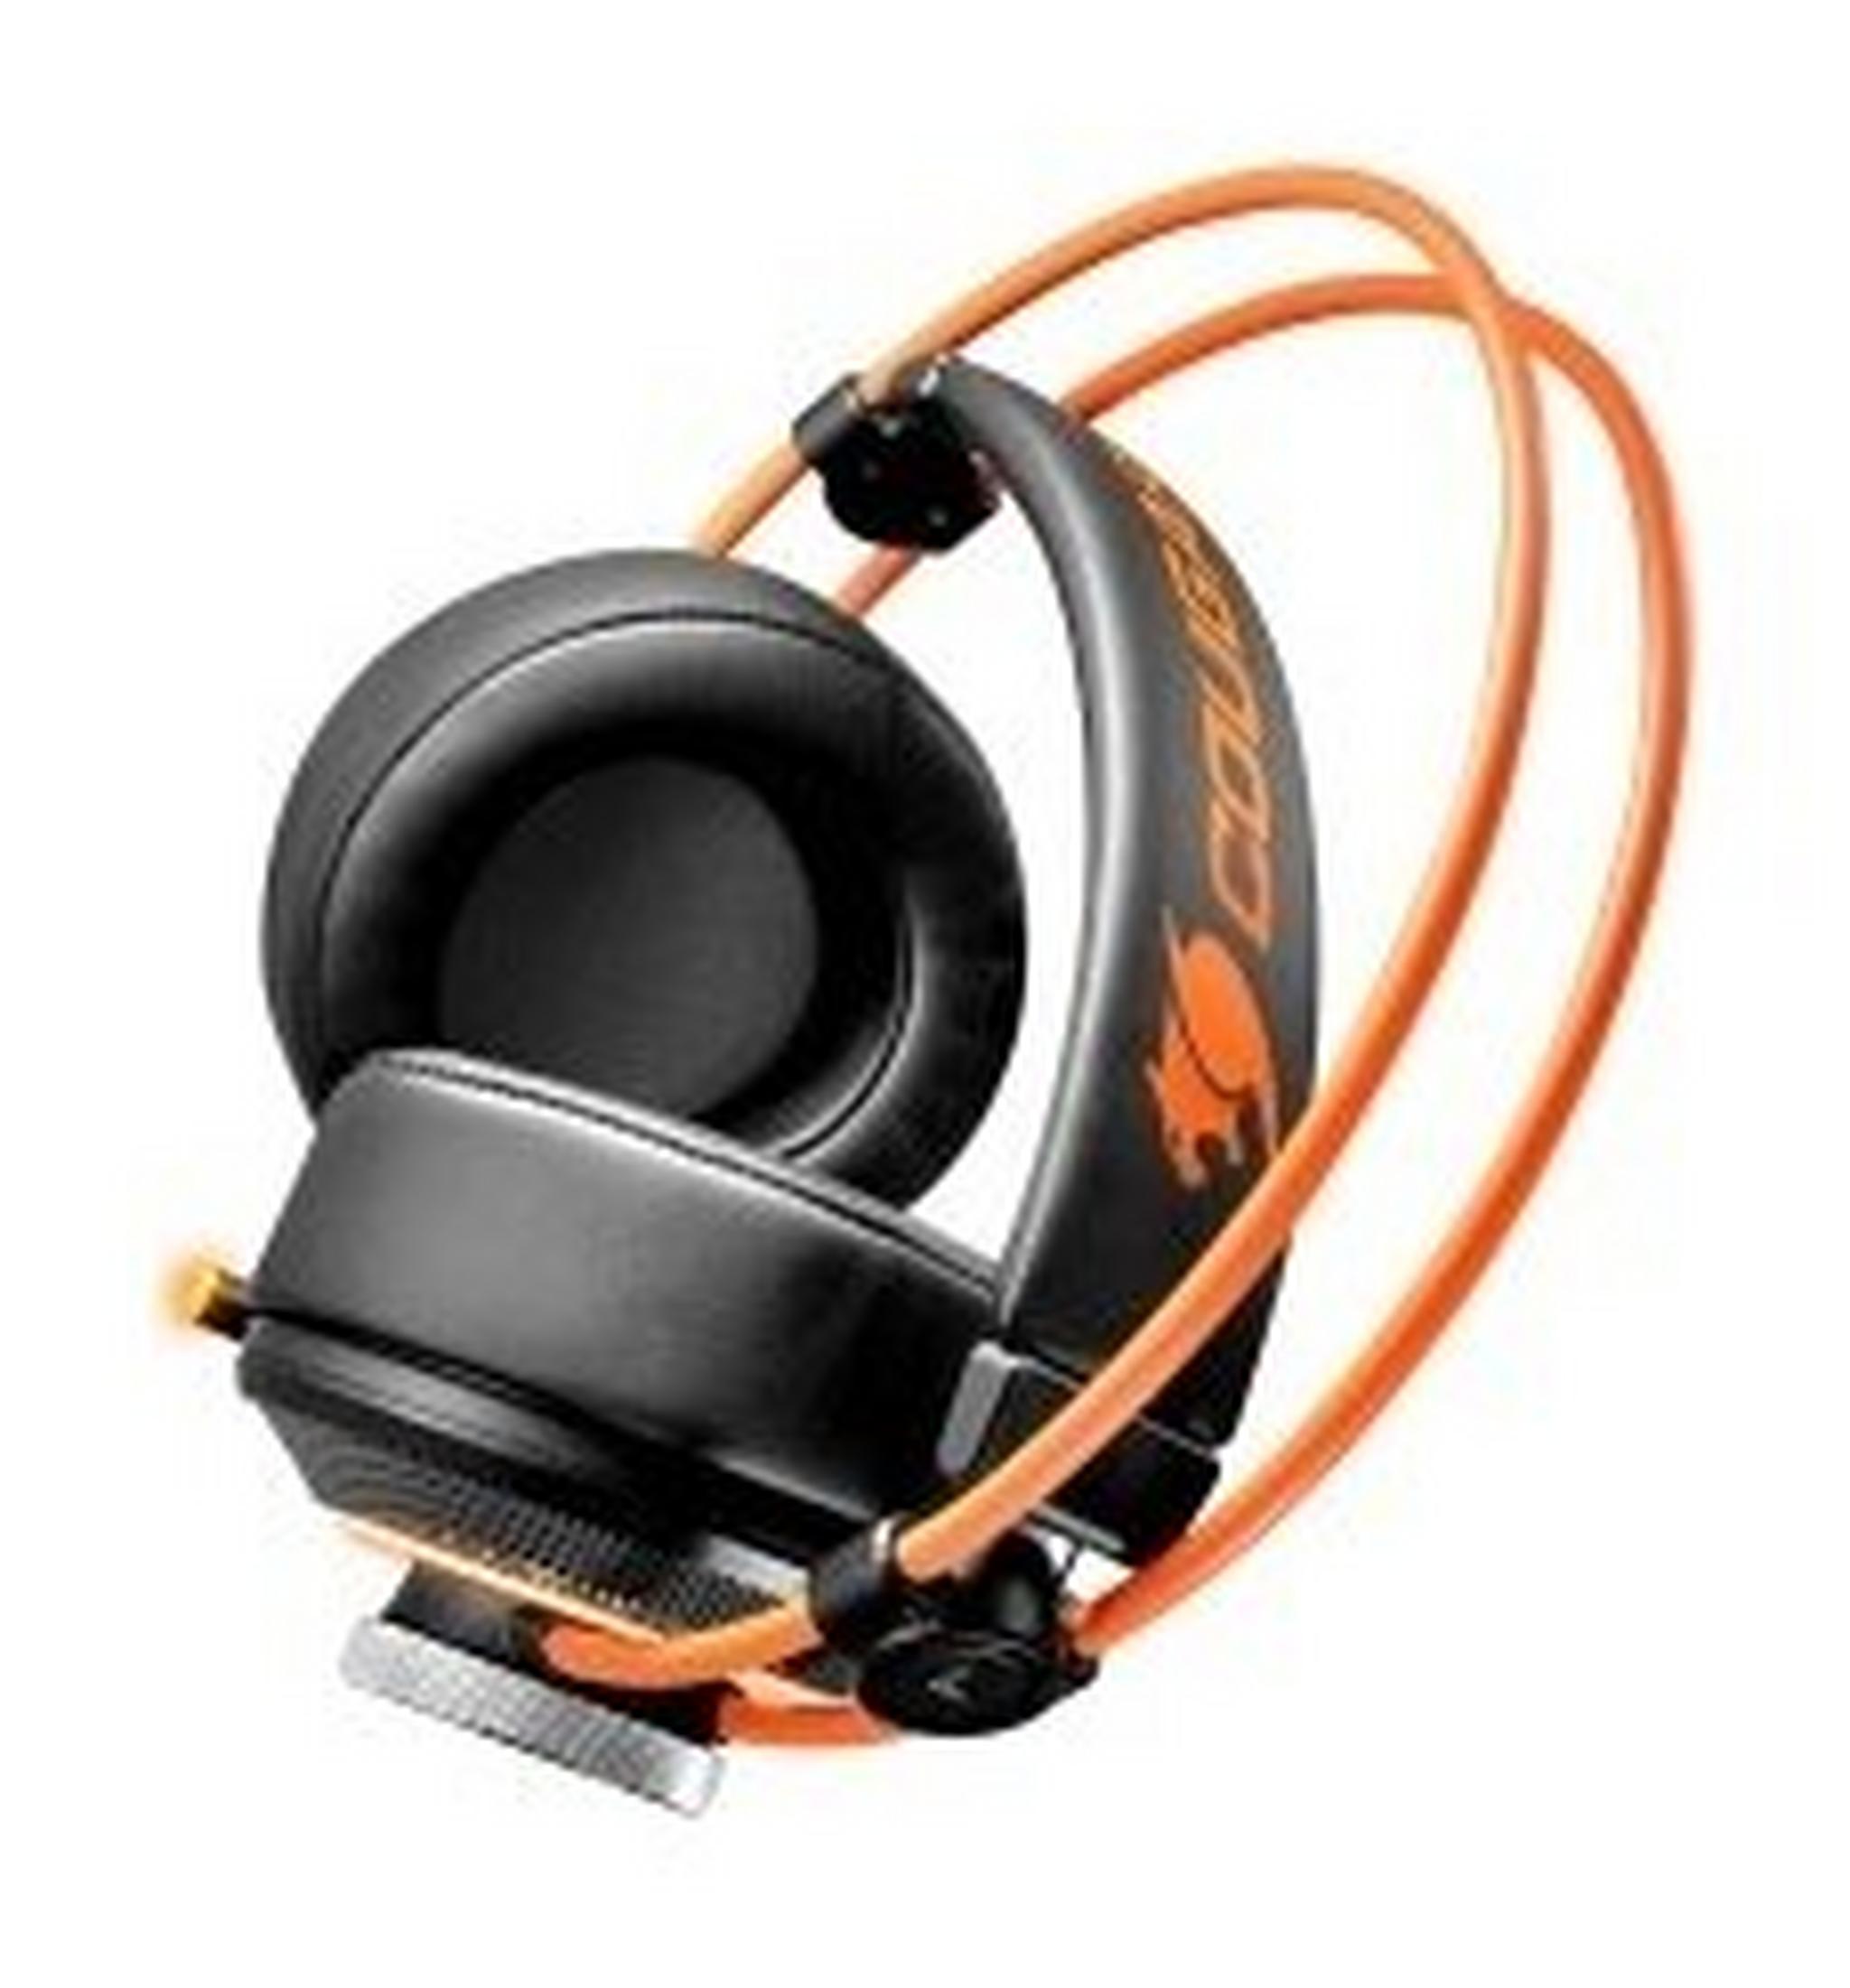 Cougar Immersa Pro 7.1 Virtual Surround Audio  Gaming Headset - Black